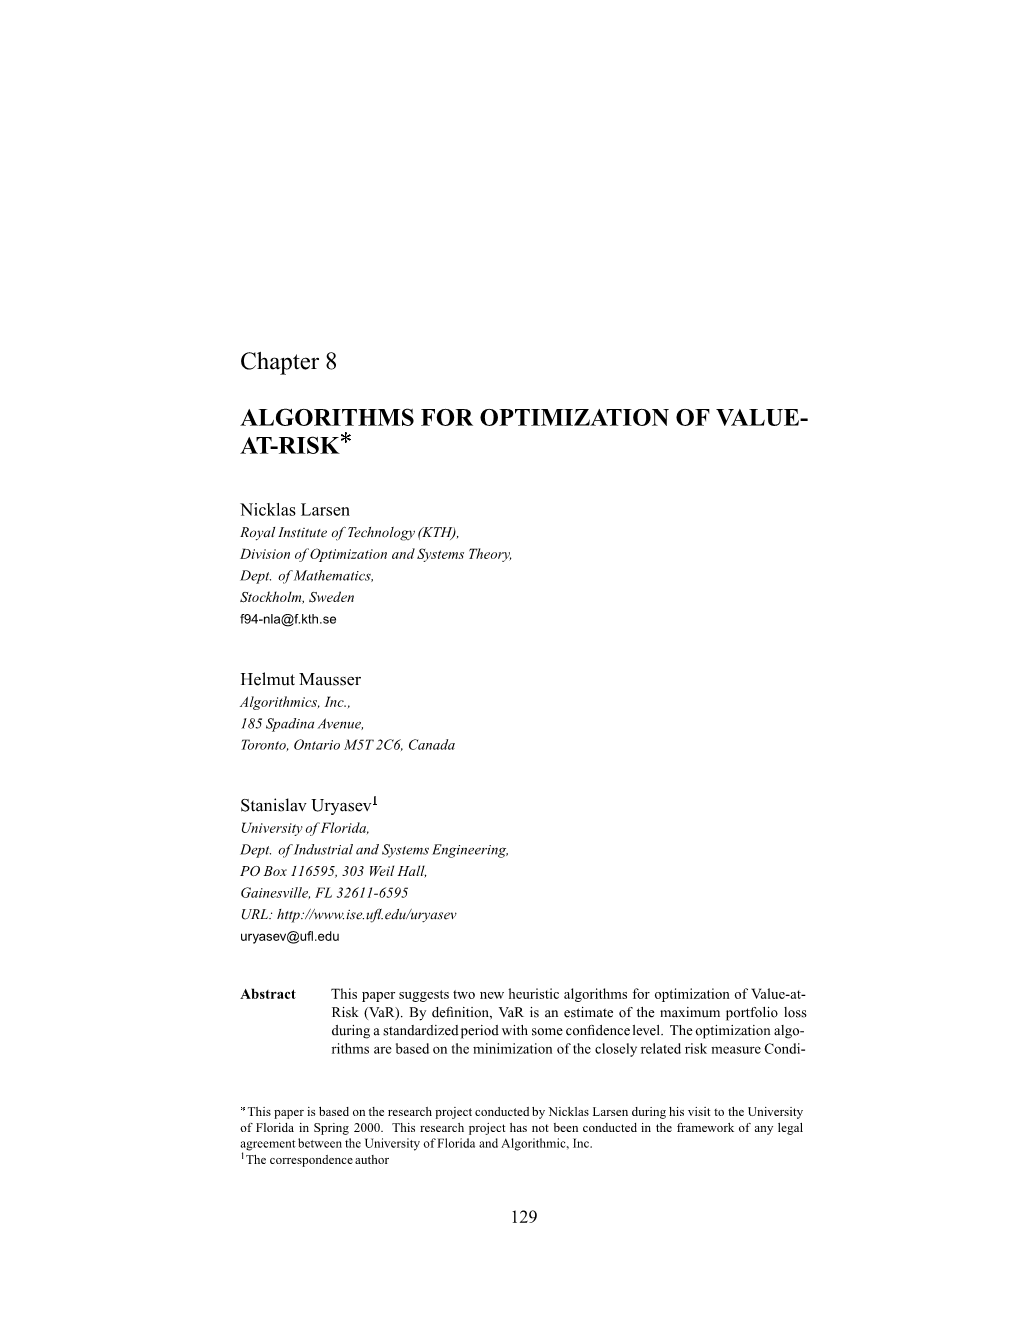 Chapter 8 ALGORITHMS for OPTIMIZATION of VALUE